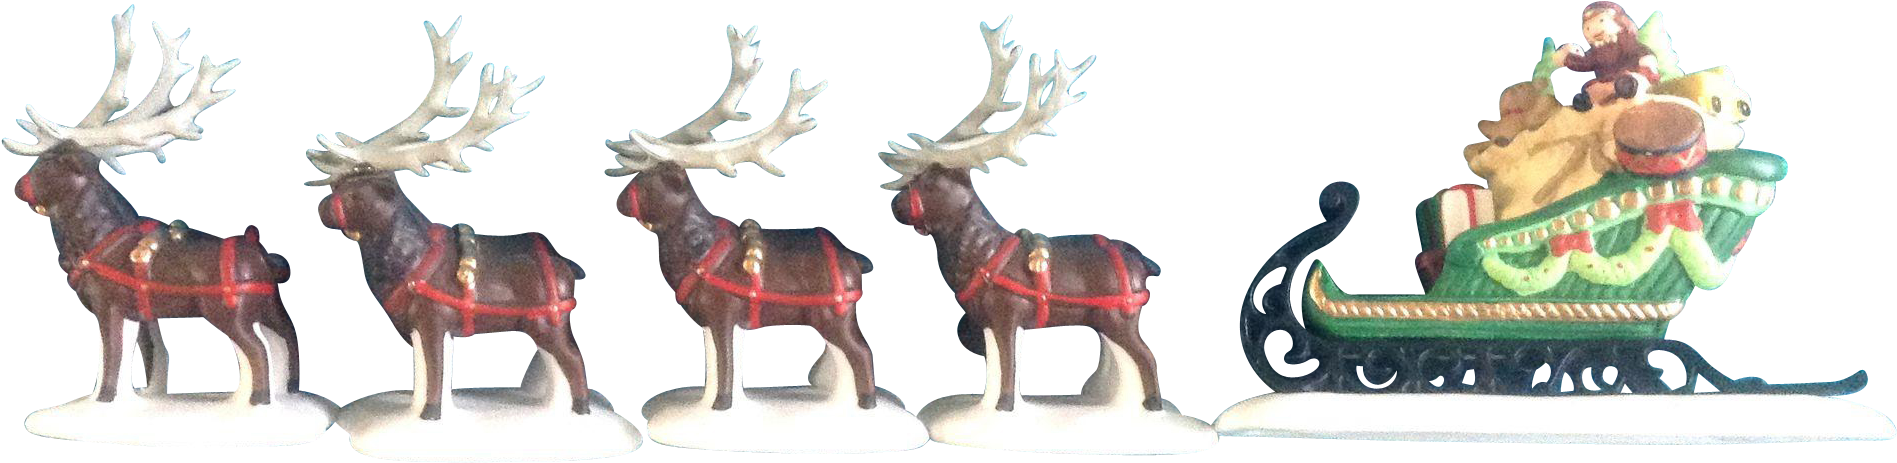 Christmas Reindeerand Sleigh Decoration